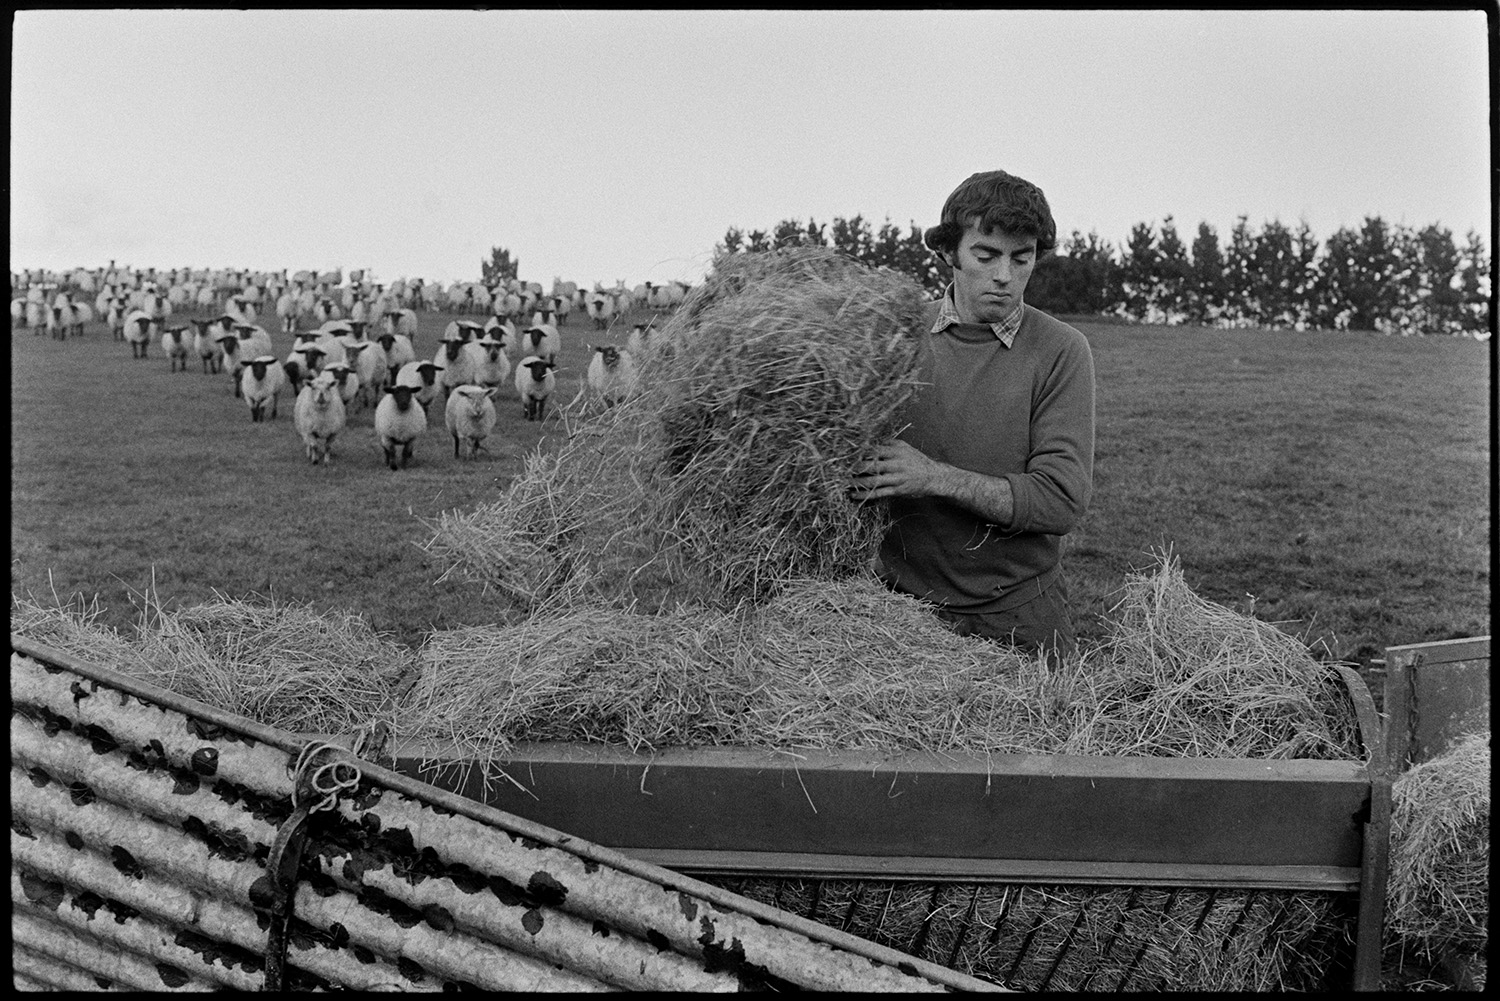 Feeding sheep, filling hayrack. 
[Graham Ward filling a hayrack for sheep in a field at Parsonage, Iddesleigh. The flock of sheep are walking towards the hayrack.]